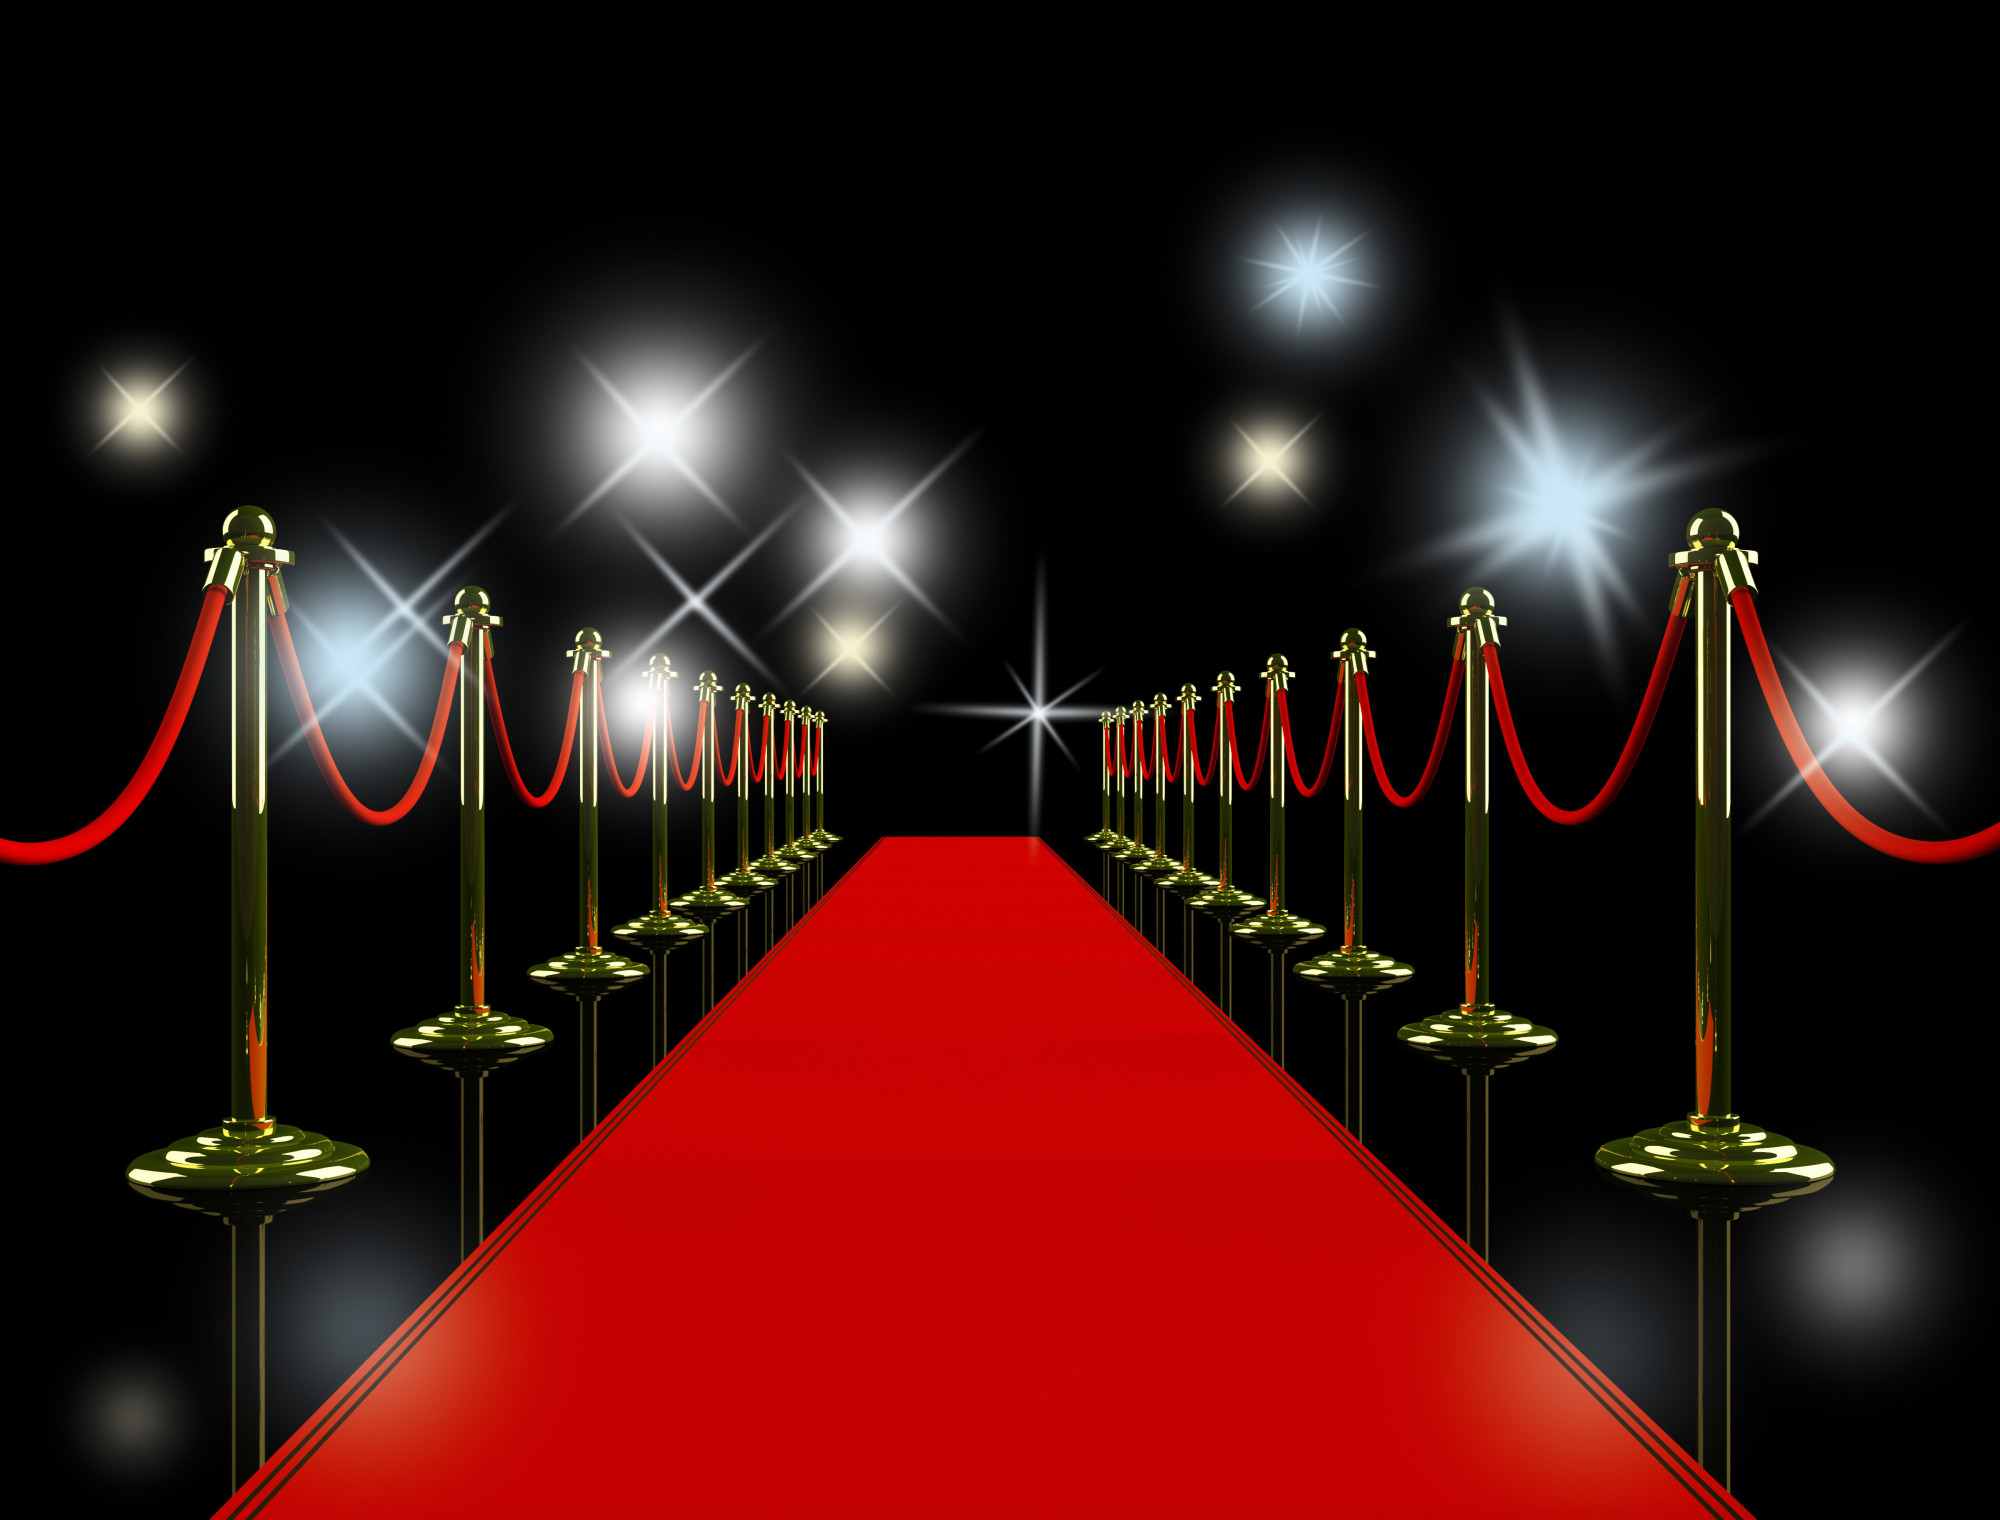 Red Carpet Event Theme